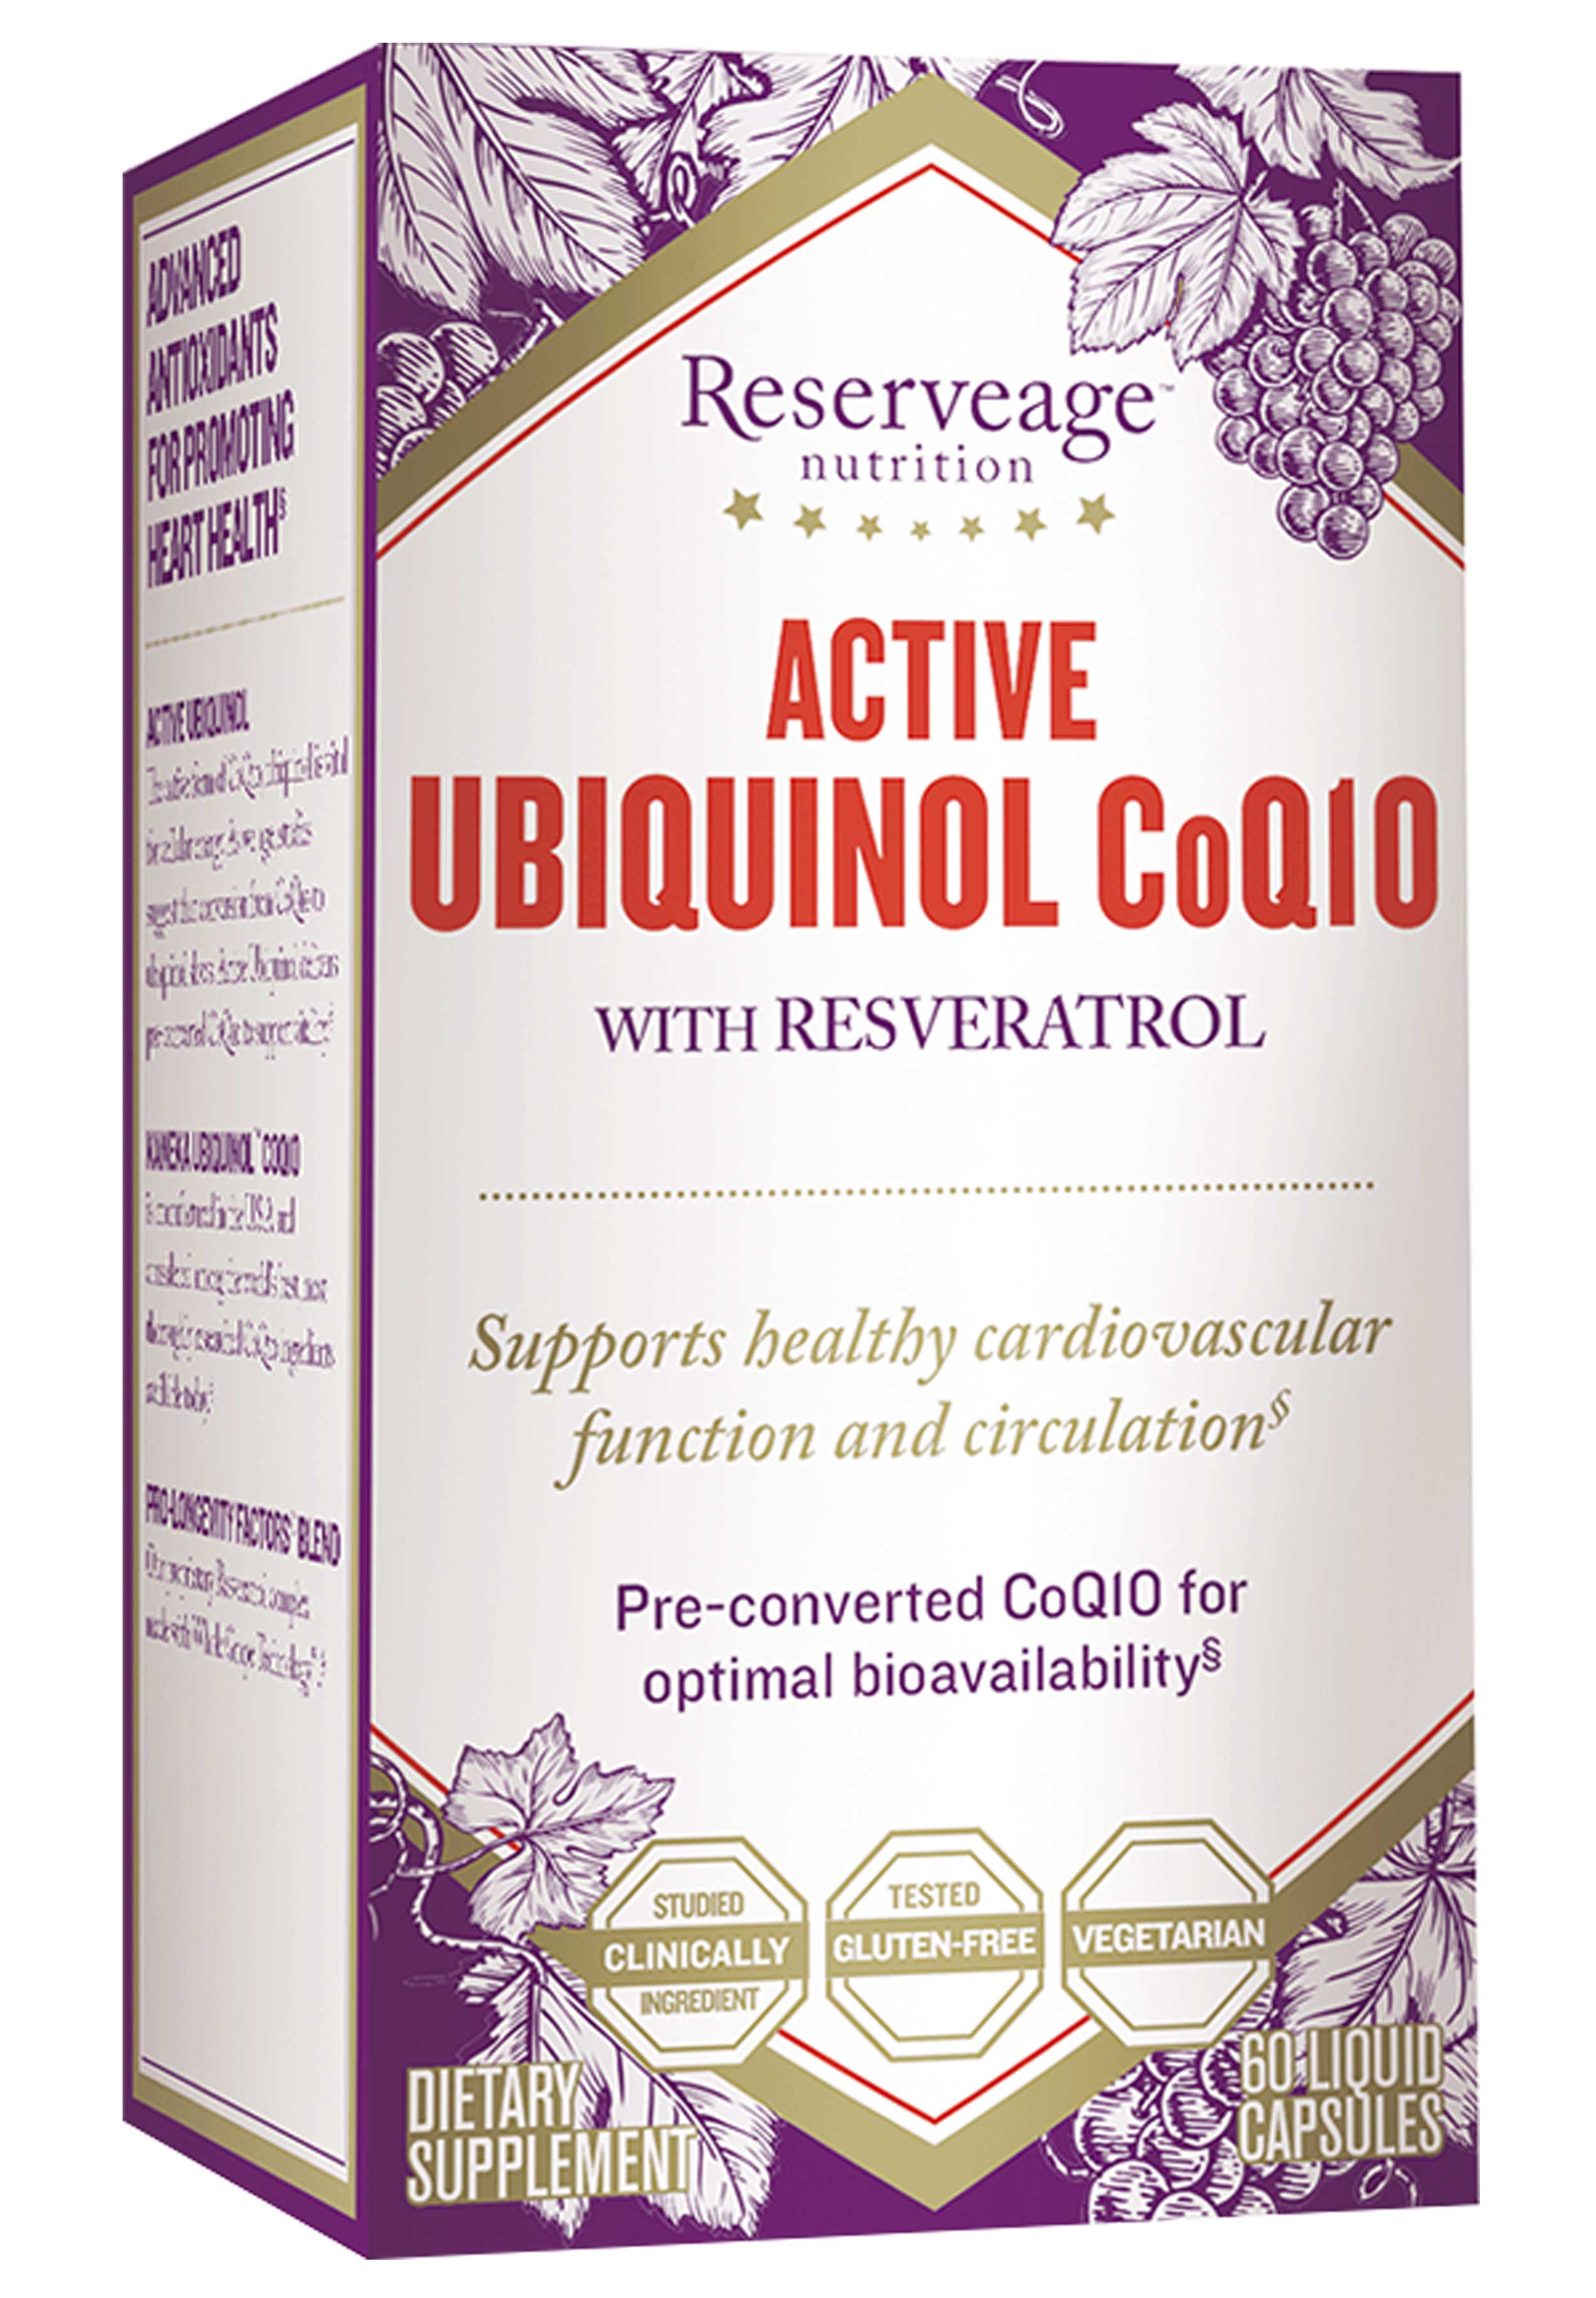 Reserveage Nutrition Active Ubiquinol CoQ10 With Resveratrol